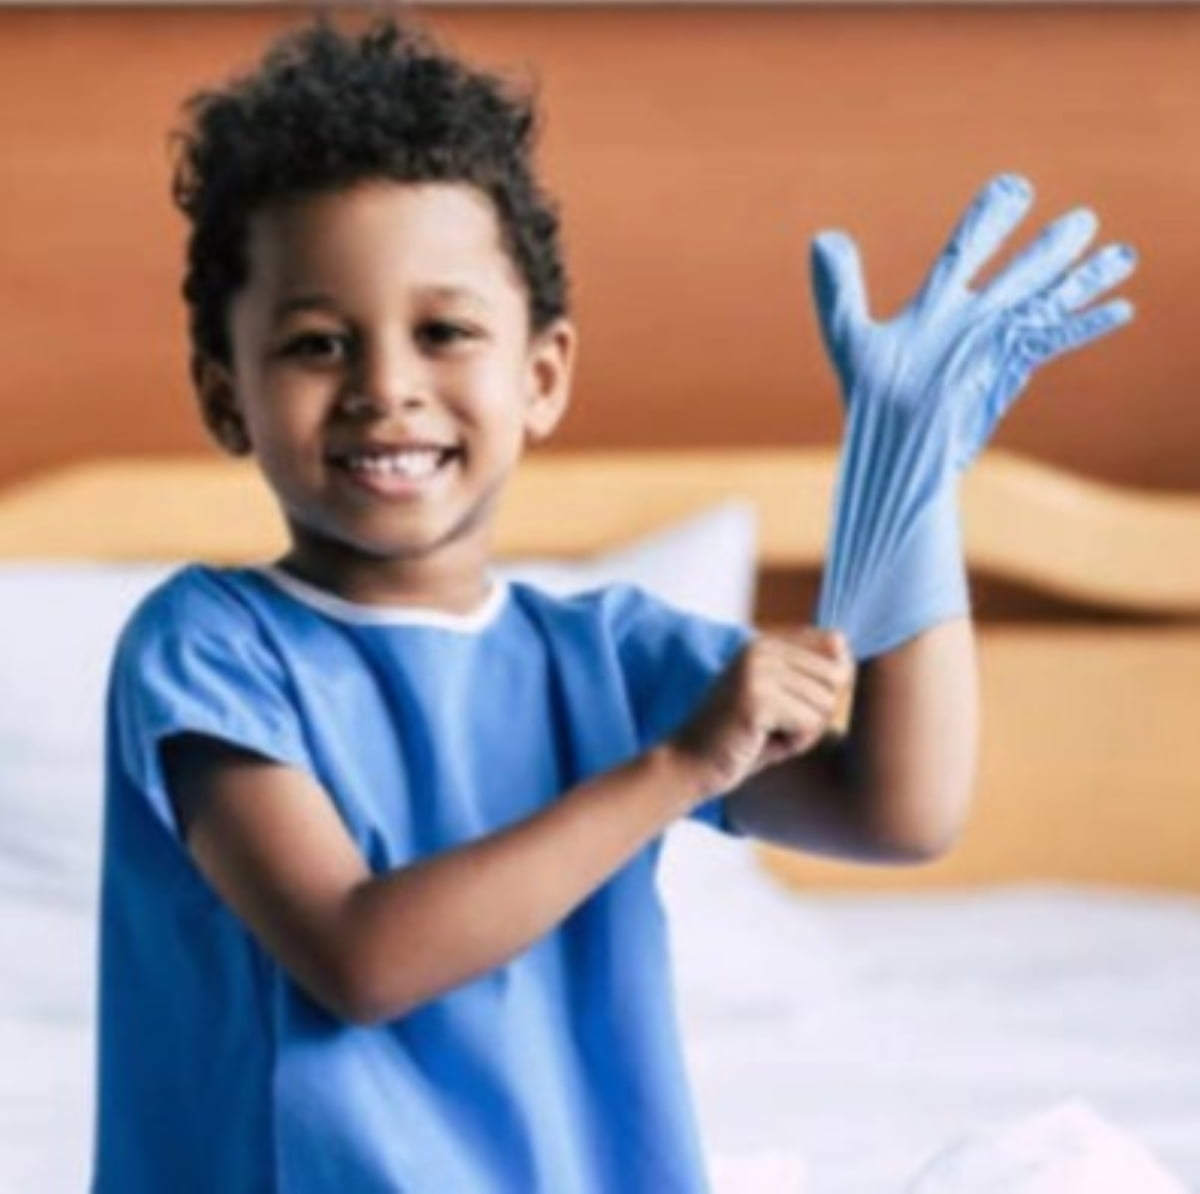 POWDER FREE DISPOSABLE Gloves for Children School Kids Multipurpose LATEX FREE 